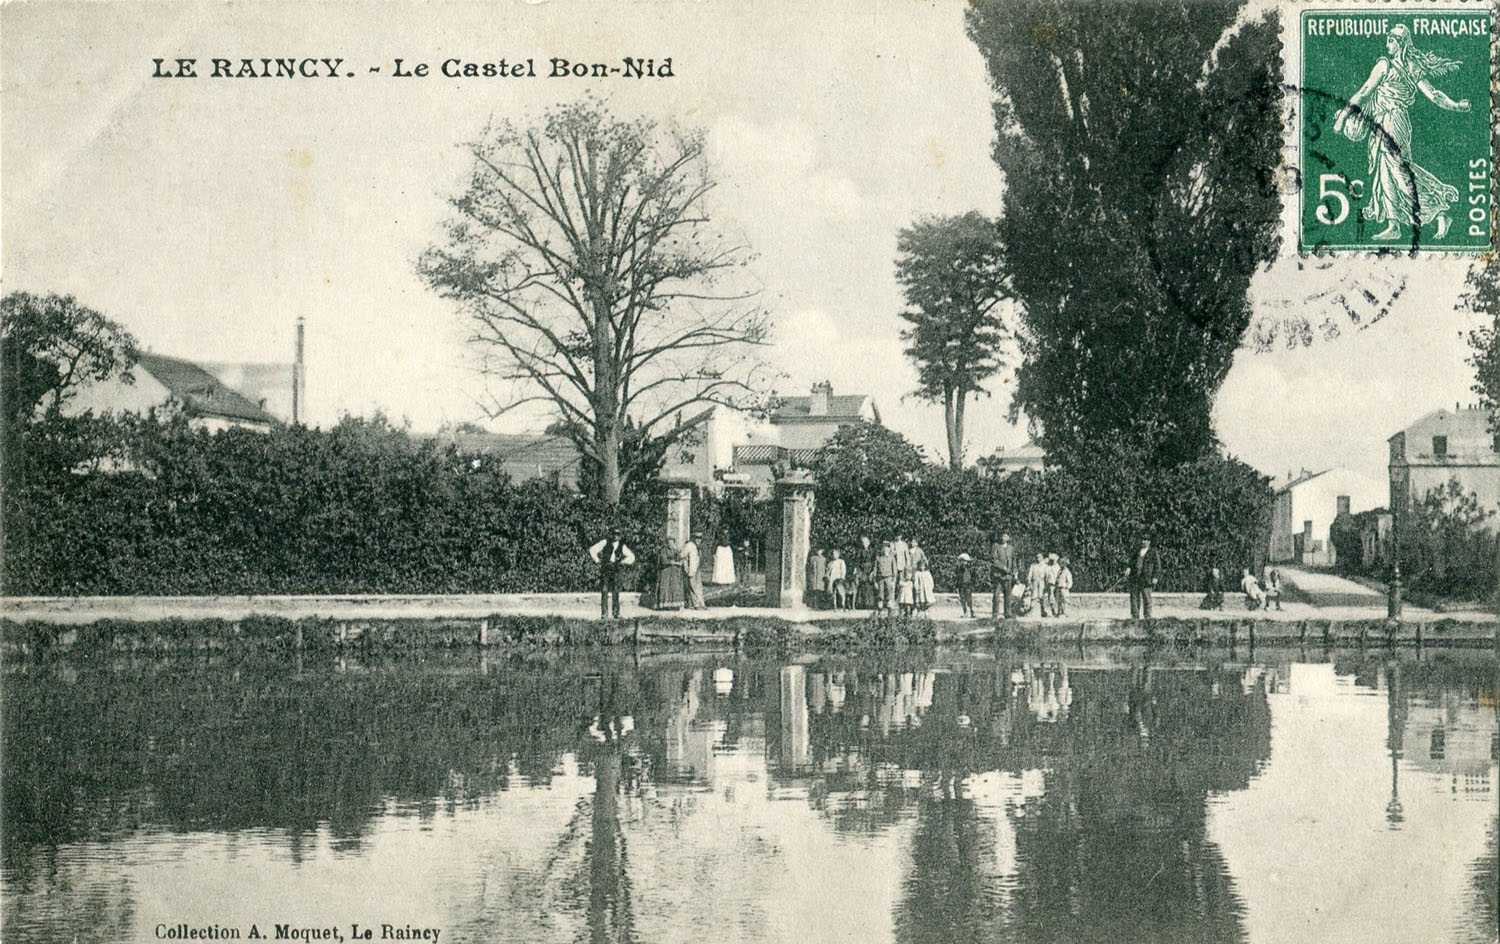 Le Raincy - Le Castel Bon-Nid